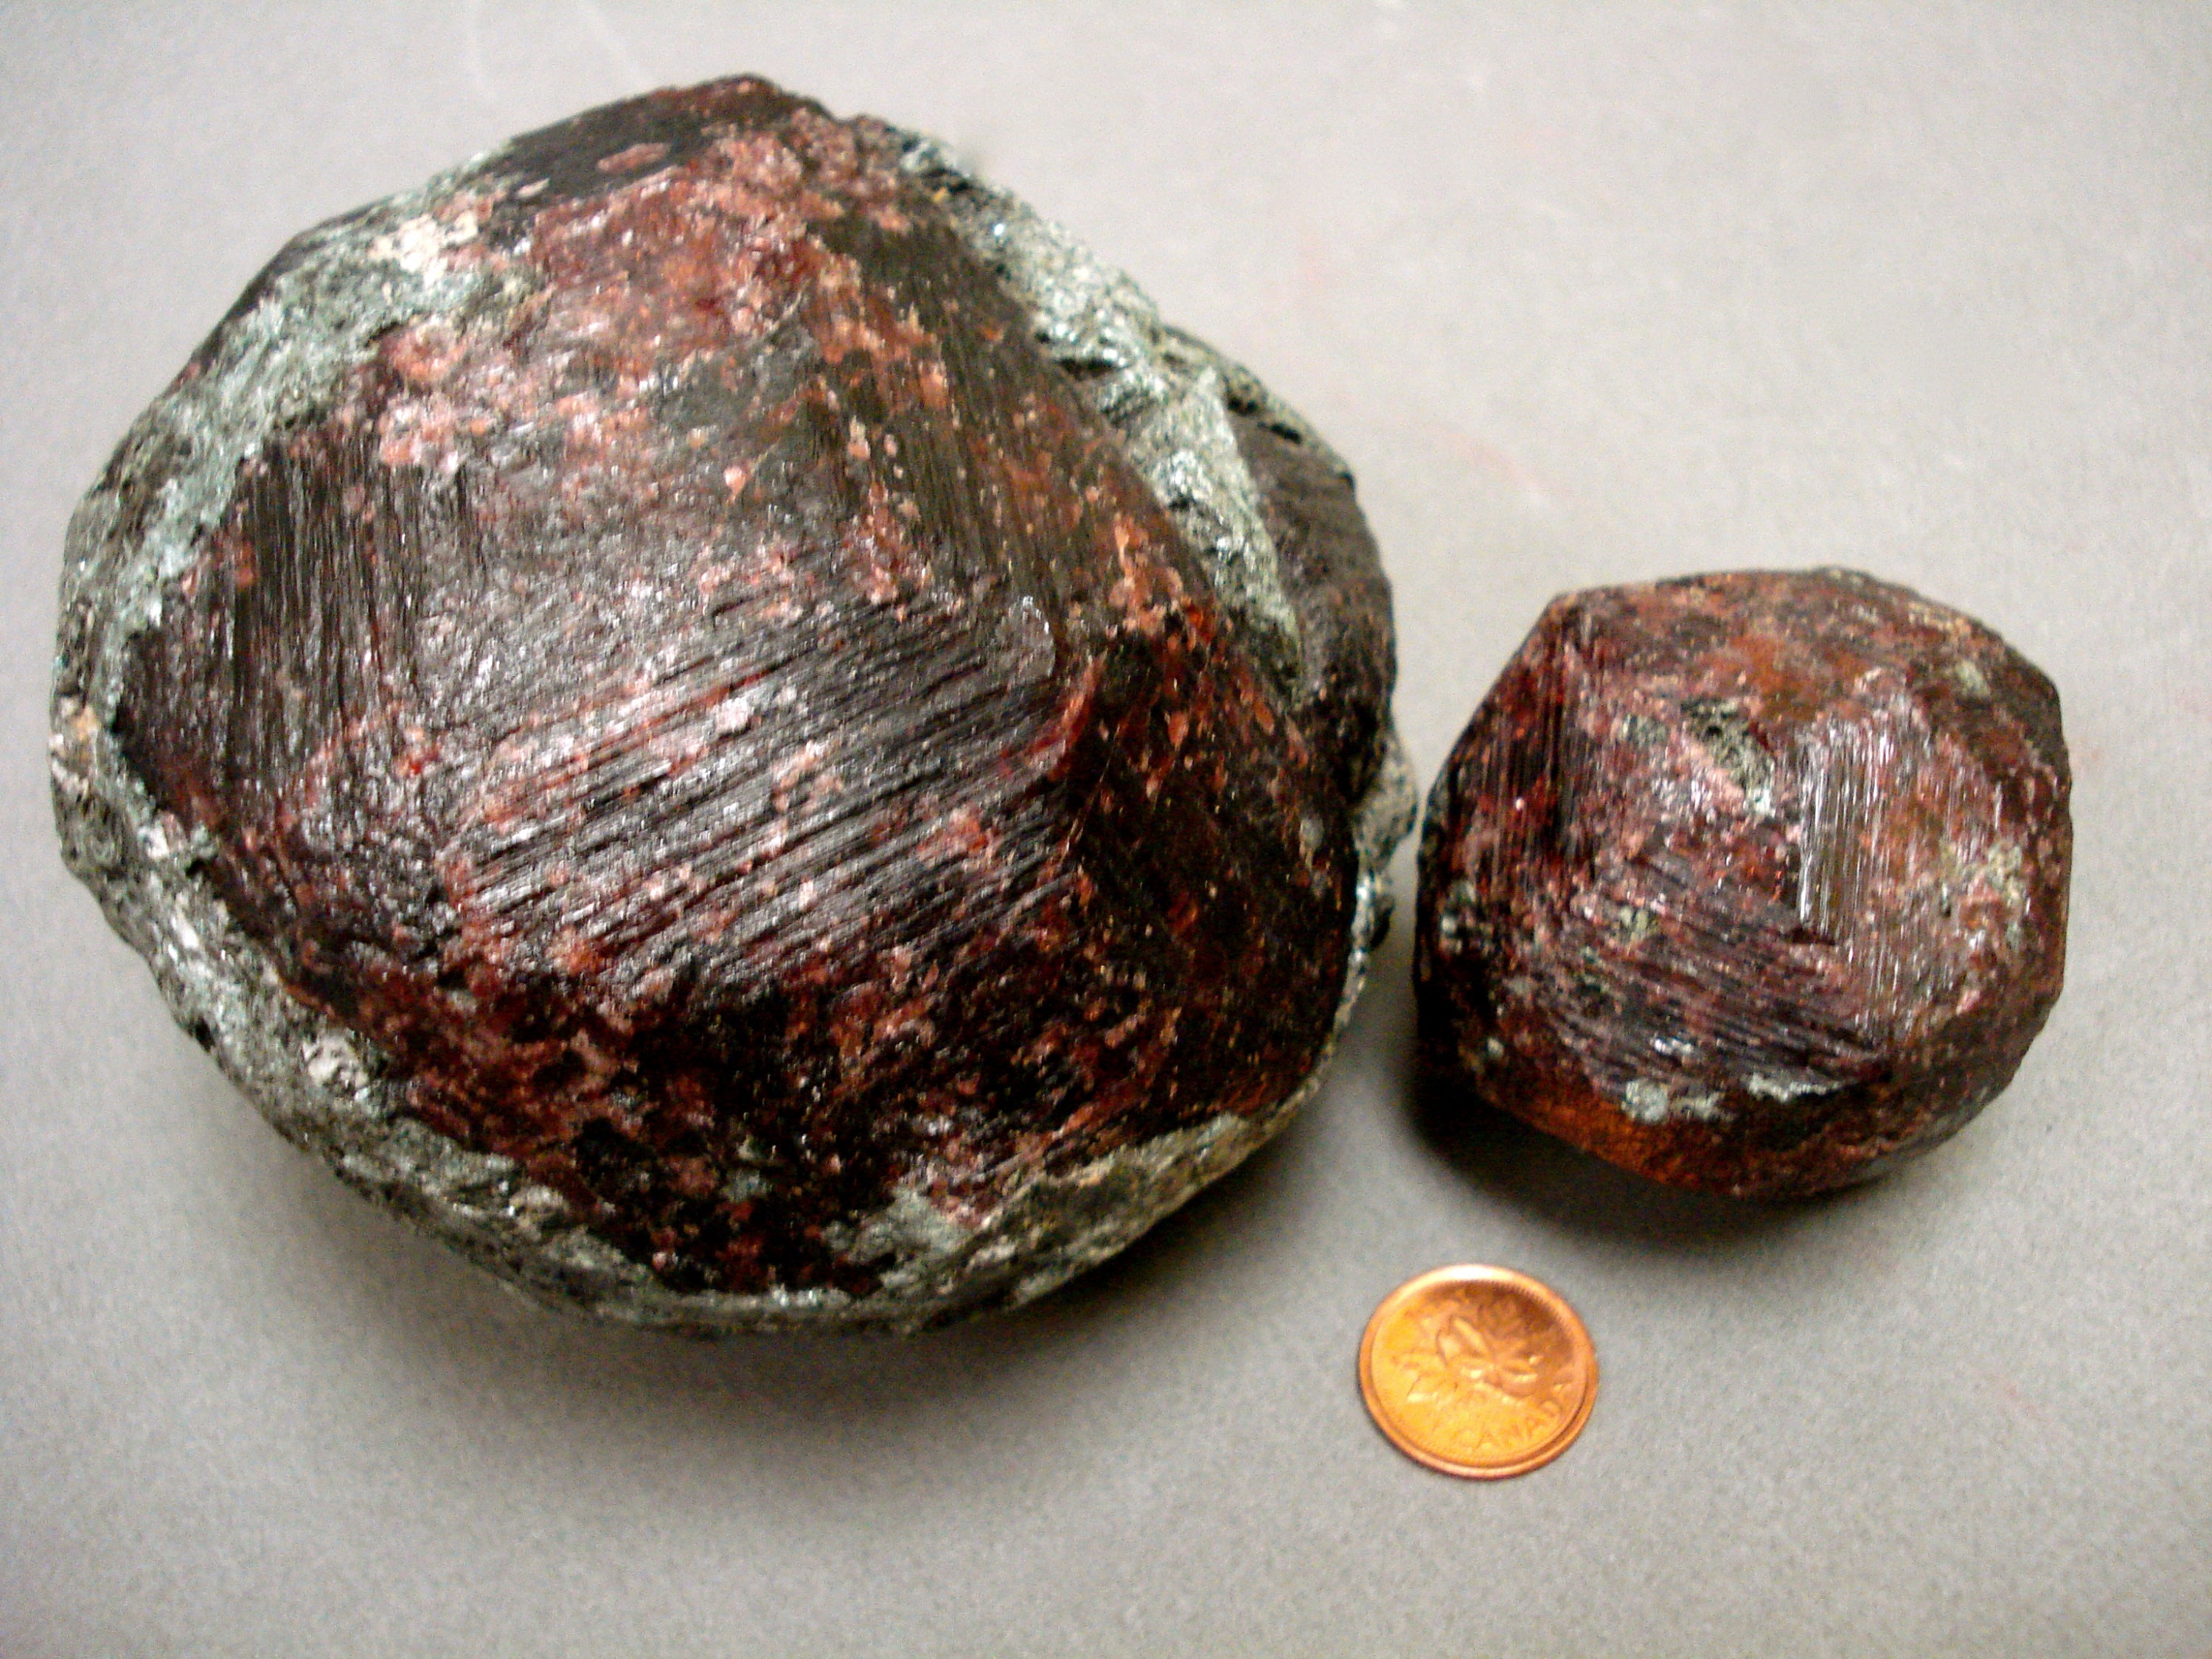 2 pieces of Almandine Garnet next to a penny for size comparison